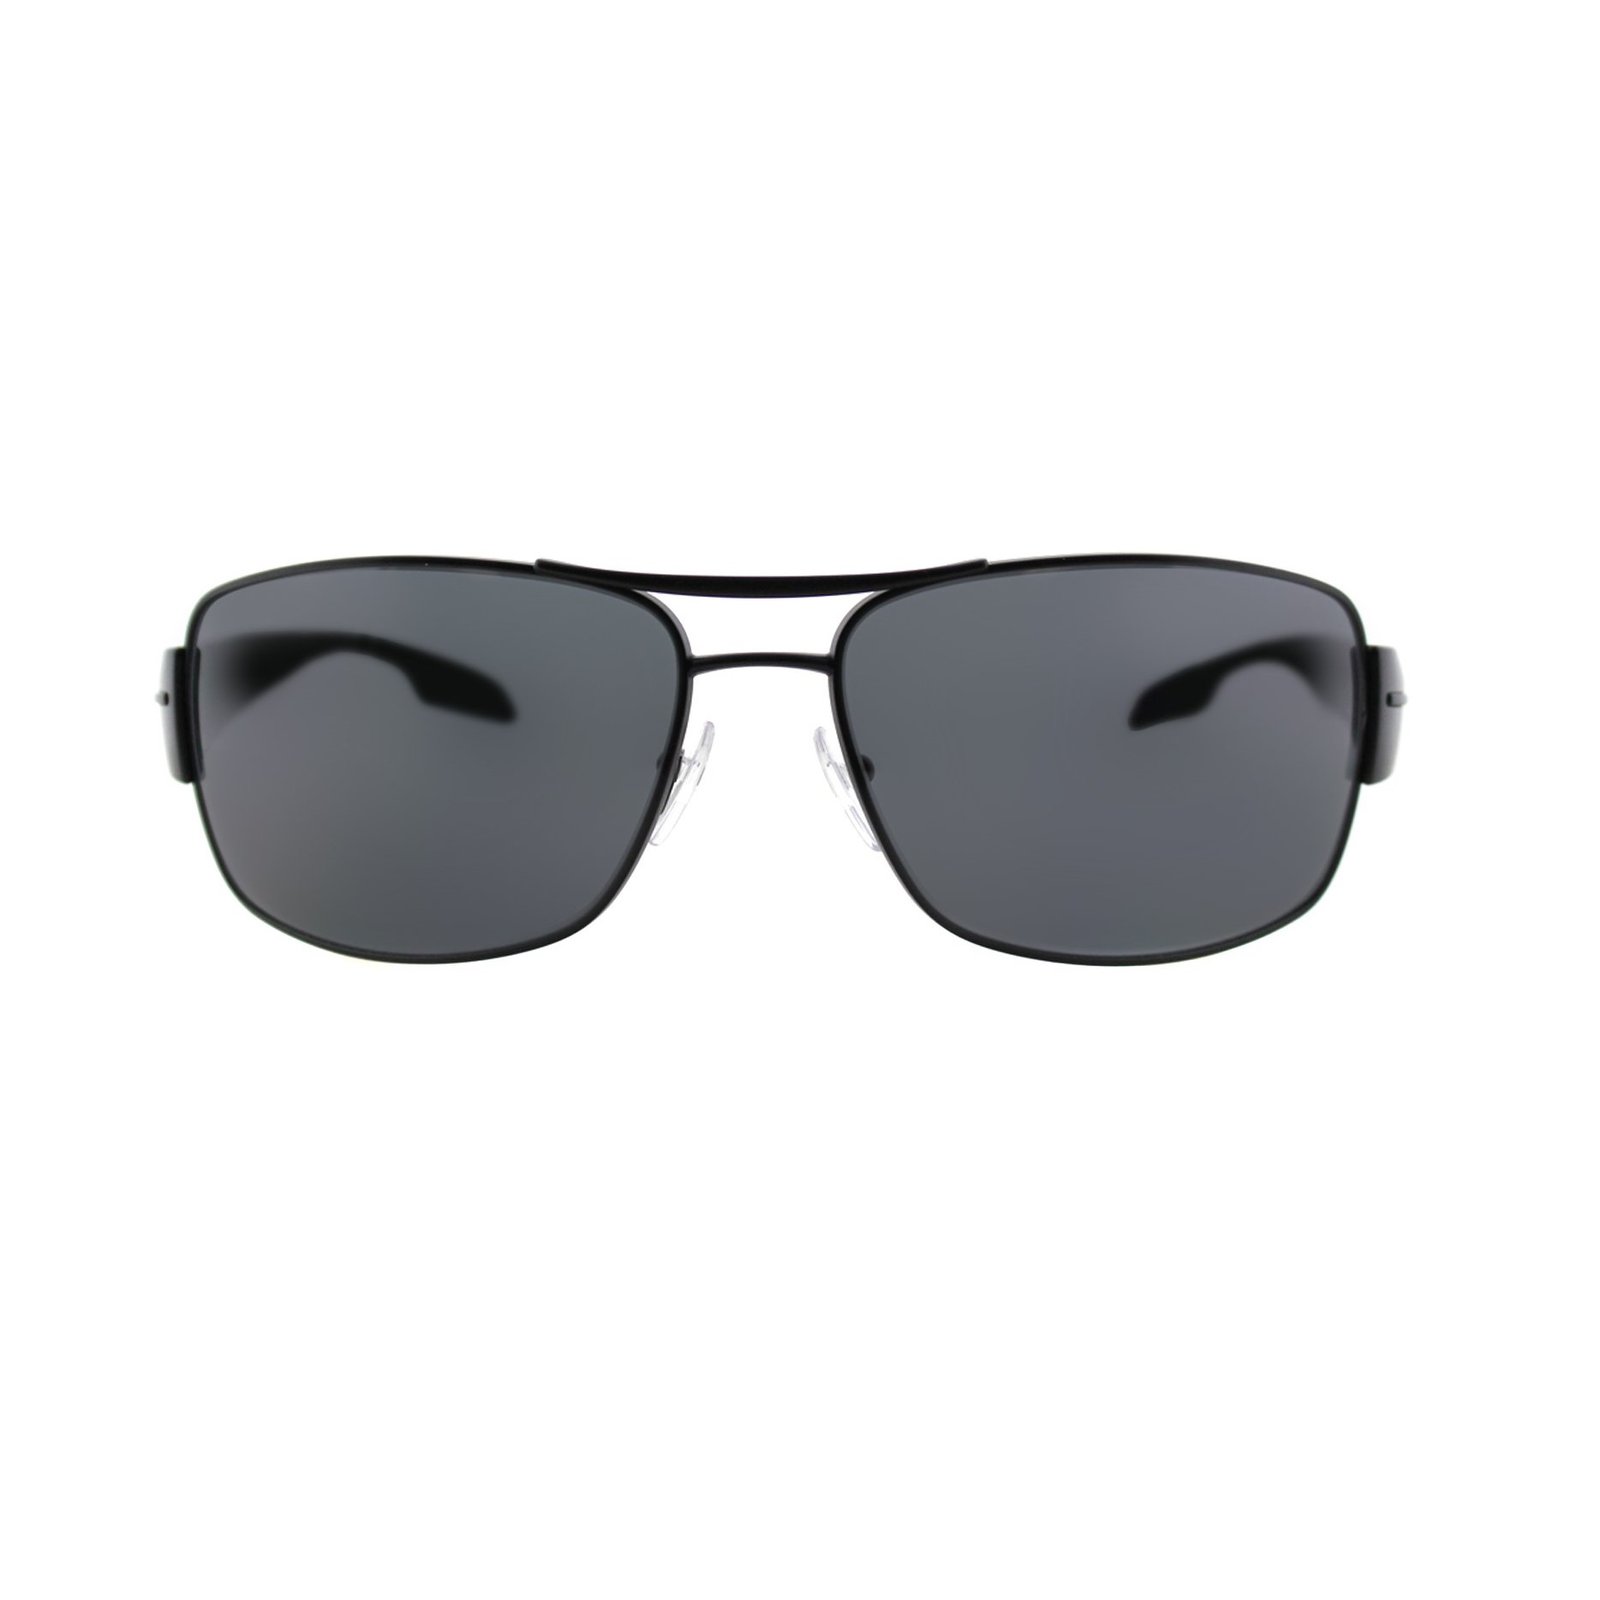 Prada SPS53N Sunglasses - Purevision - The Sunglasses Shop in Queens